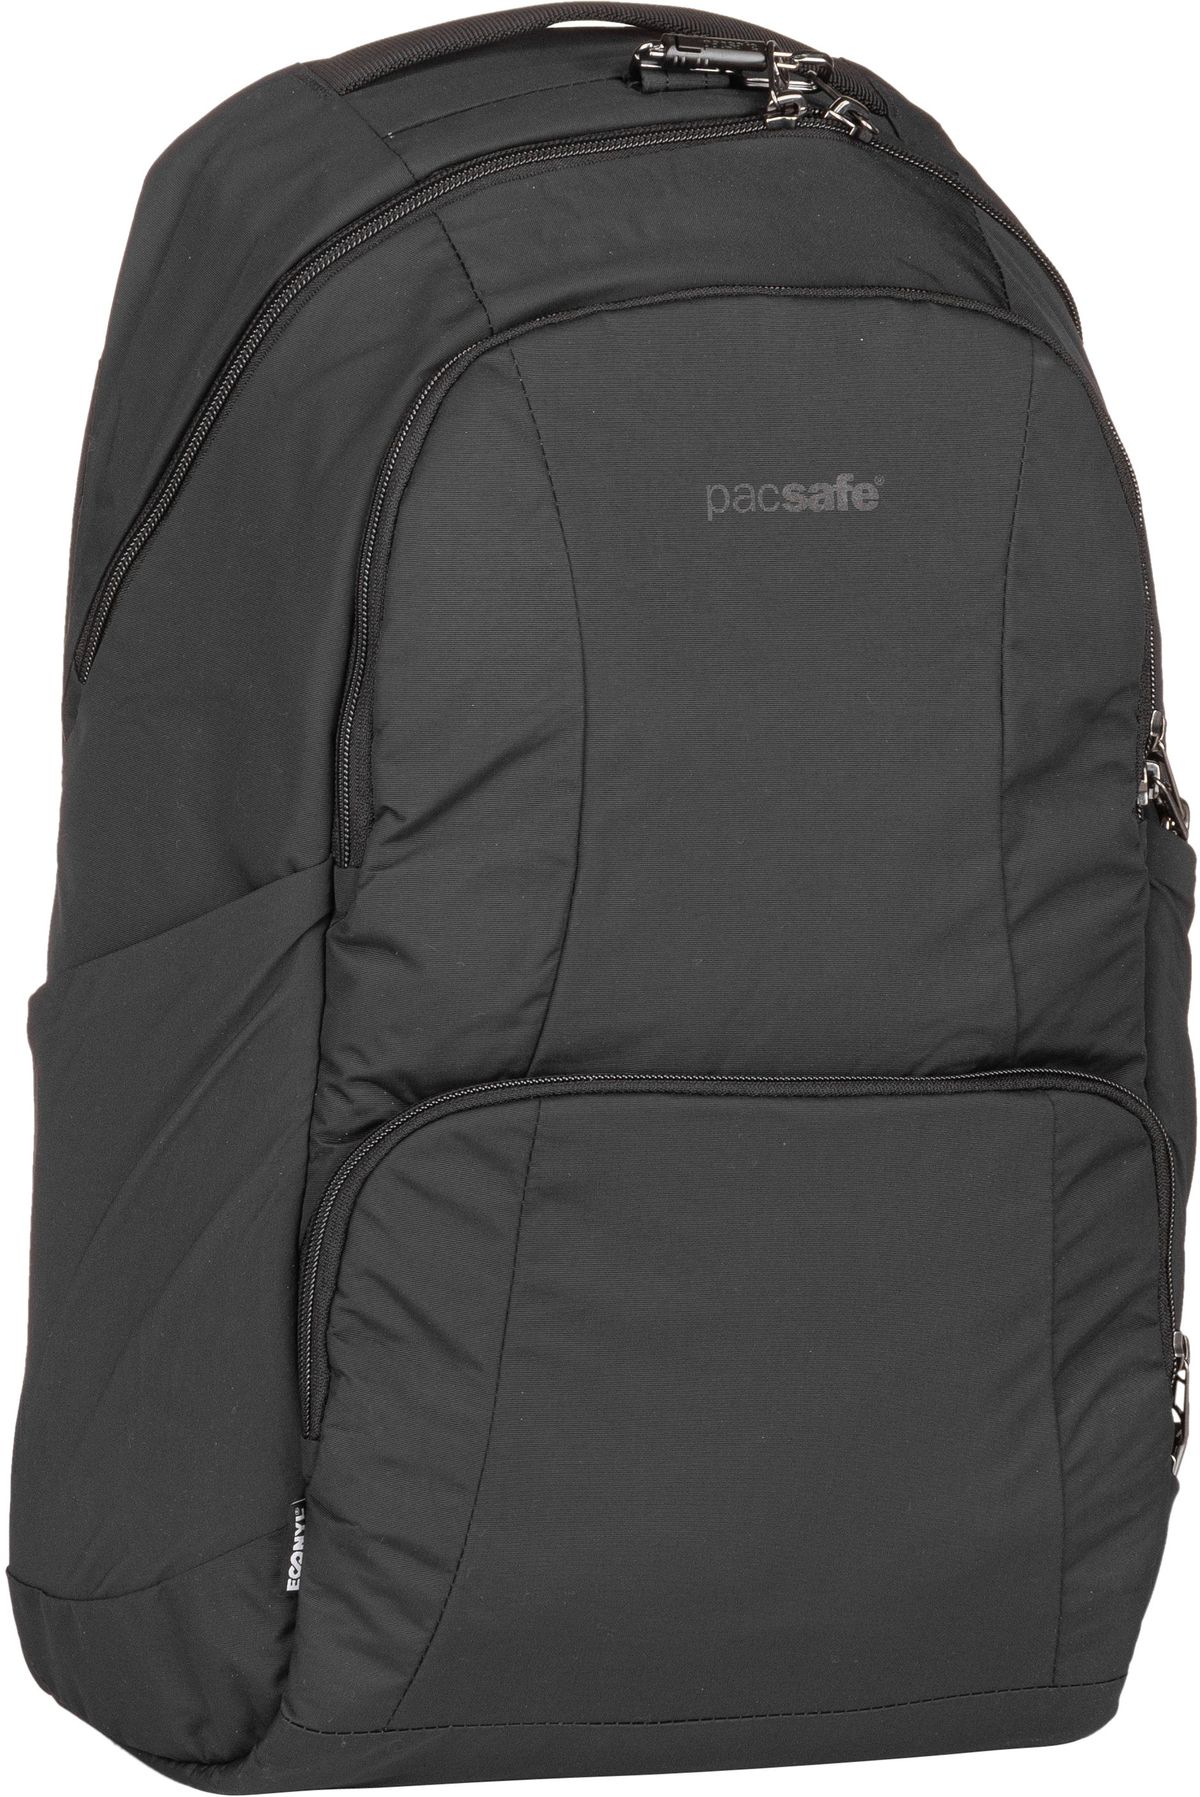 Pacsafe Pacsafe LS450 Anti-Theft 25L in Schwarz (25 Liter), Rucksack / Backpack